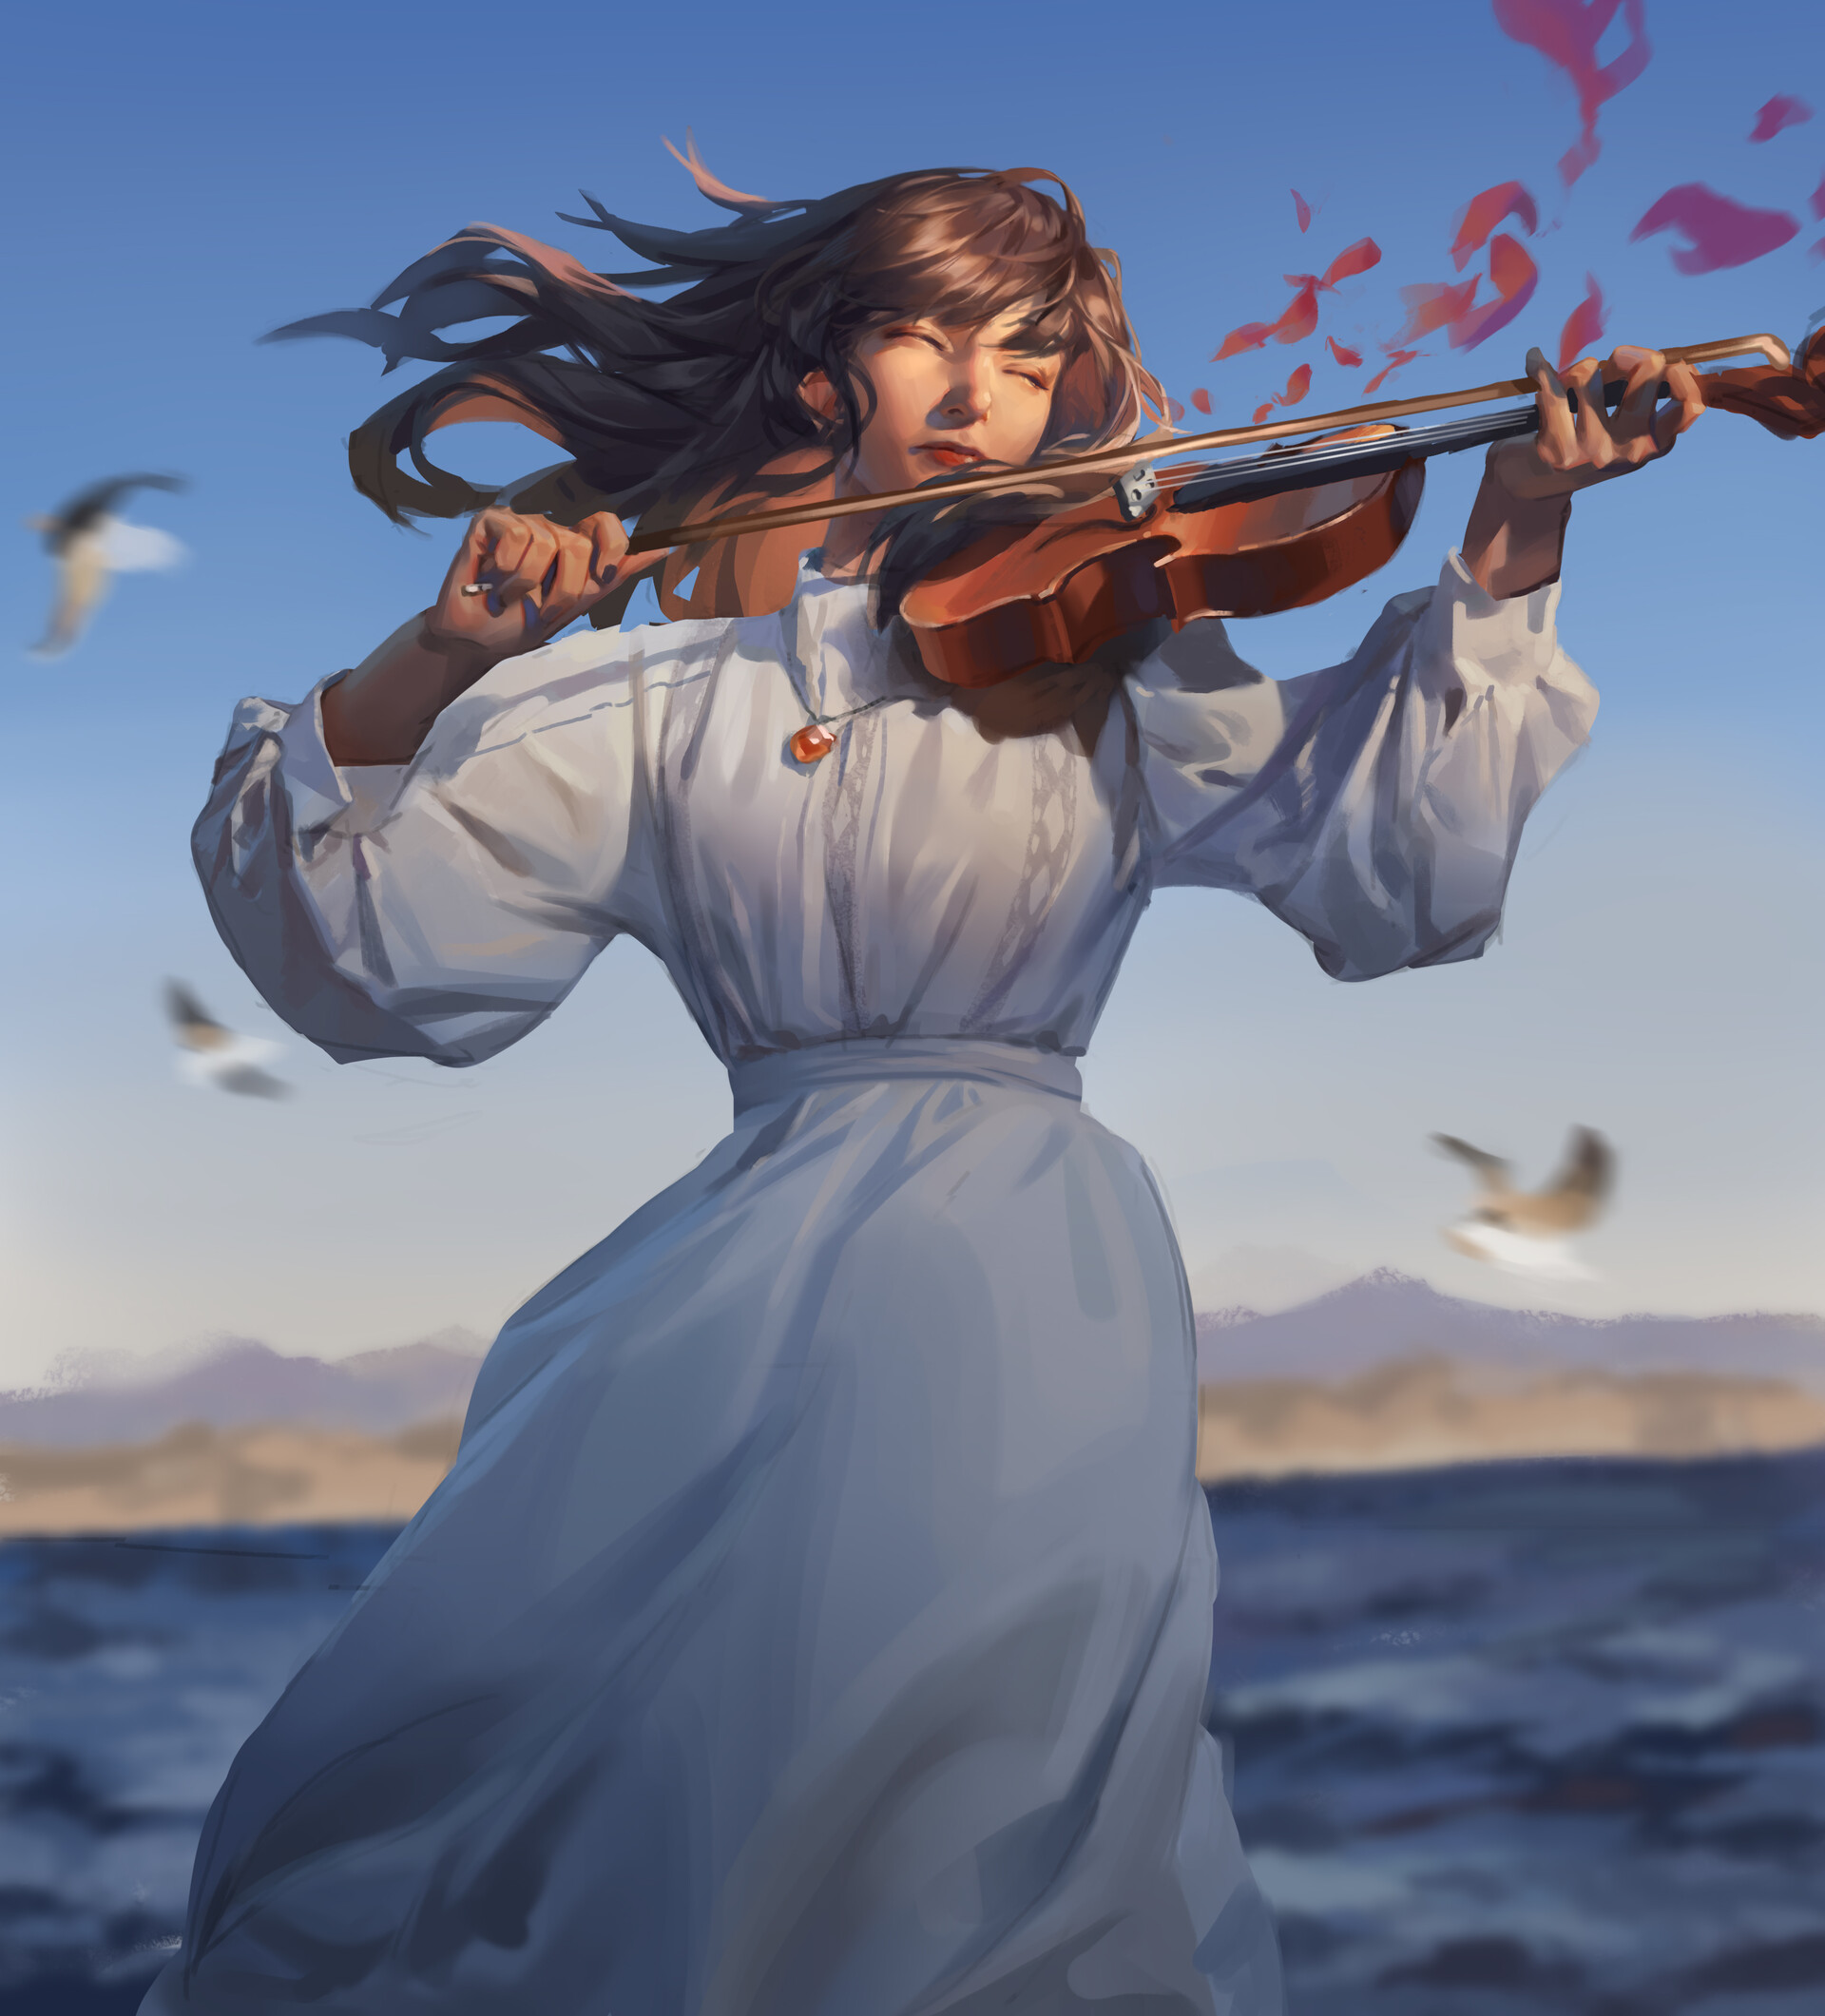 Zim Digital Art Artwork Illustration Women Violin Instrument Dark Hair Hair Blowing In The Wind Long 1920x2121